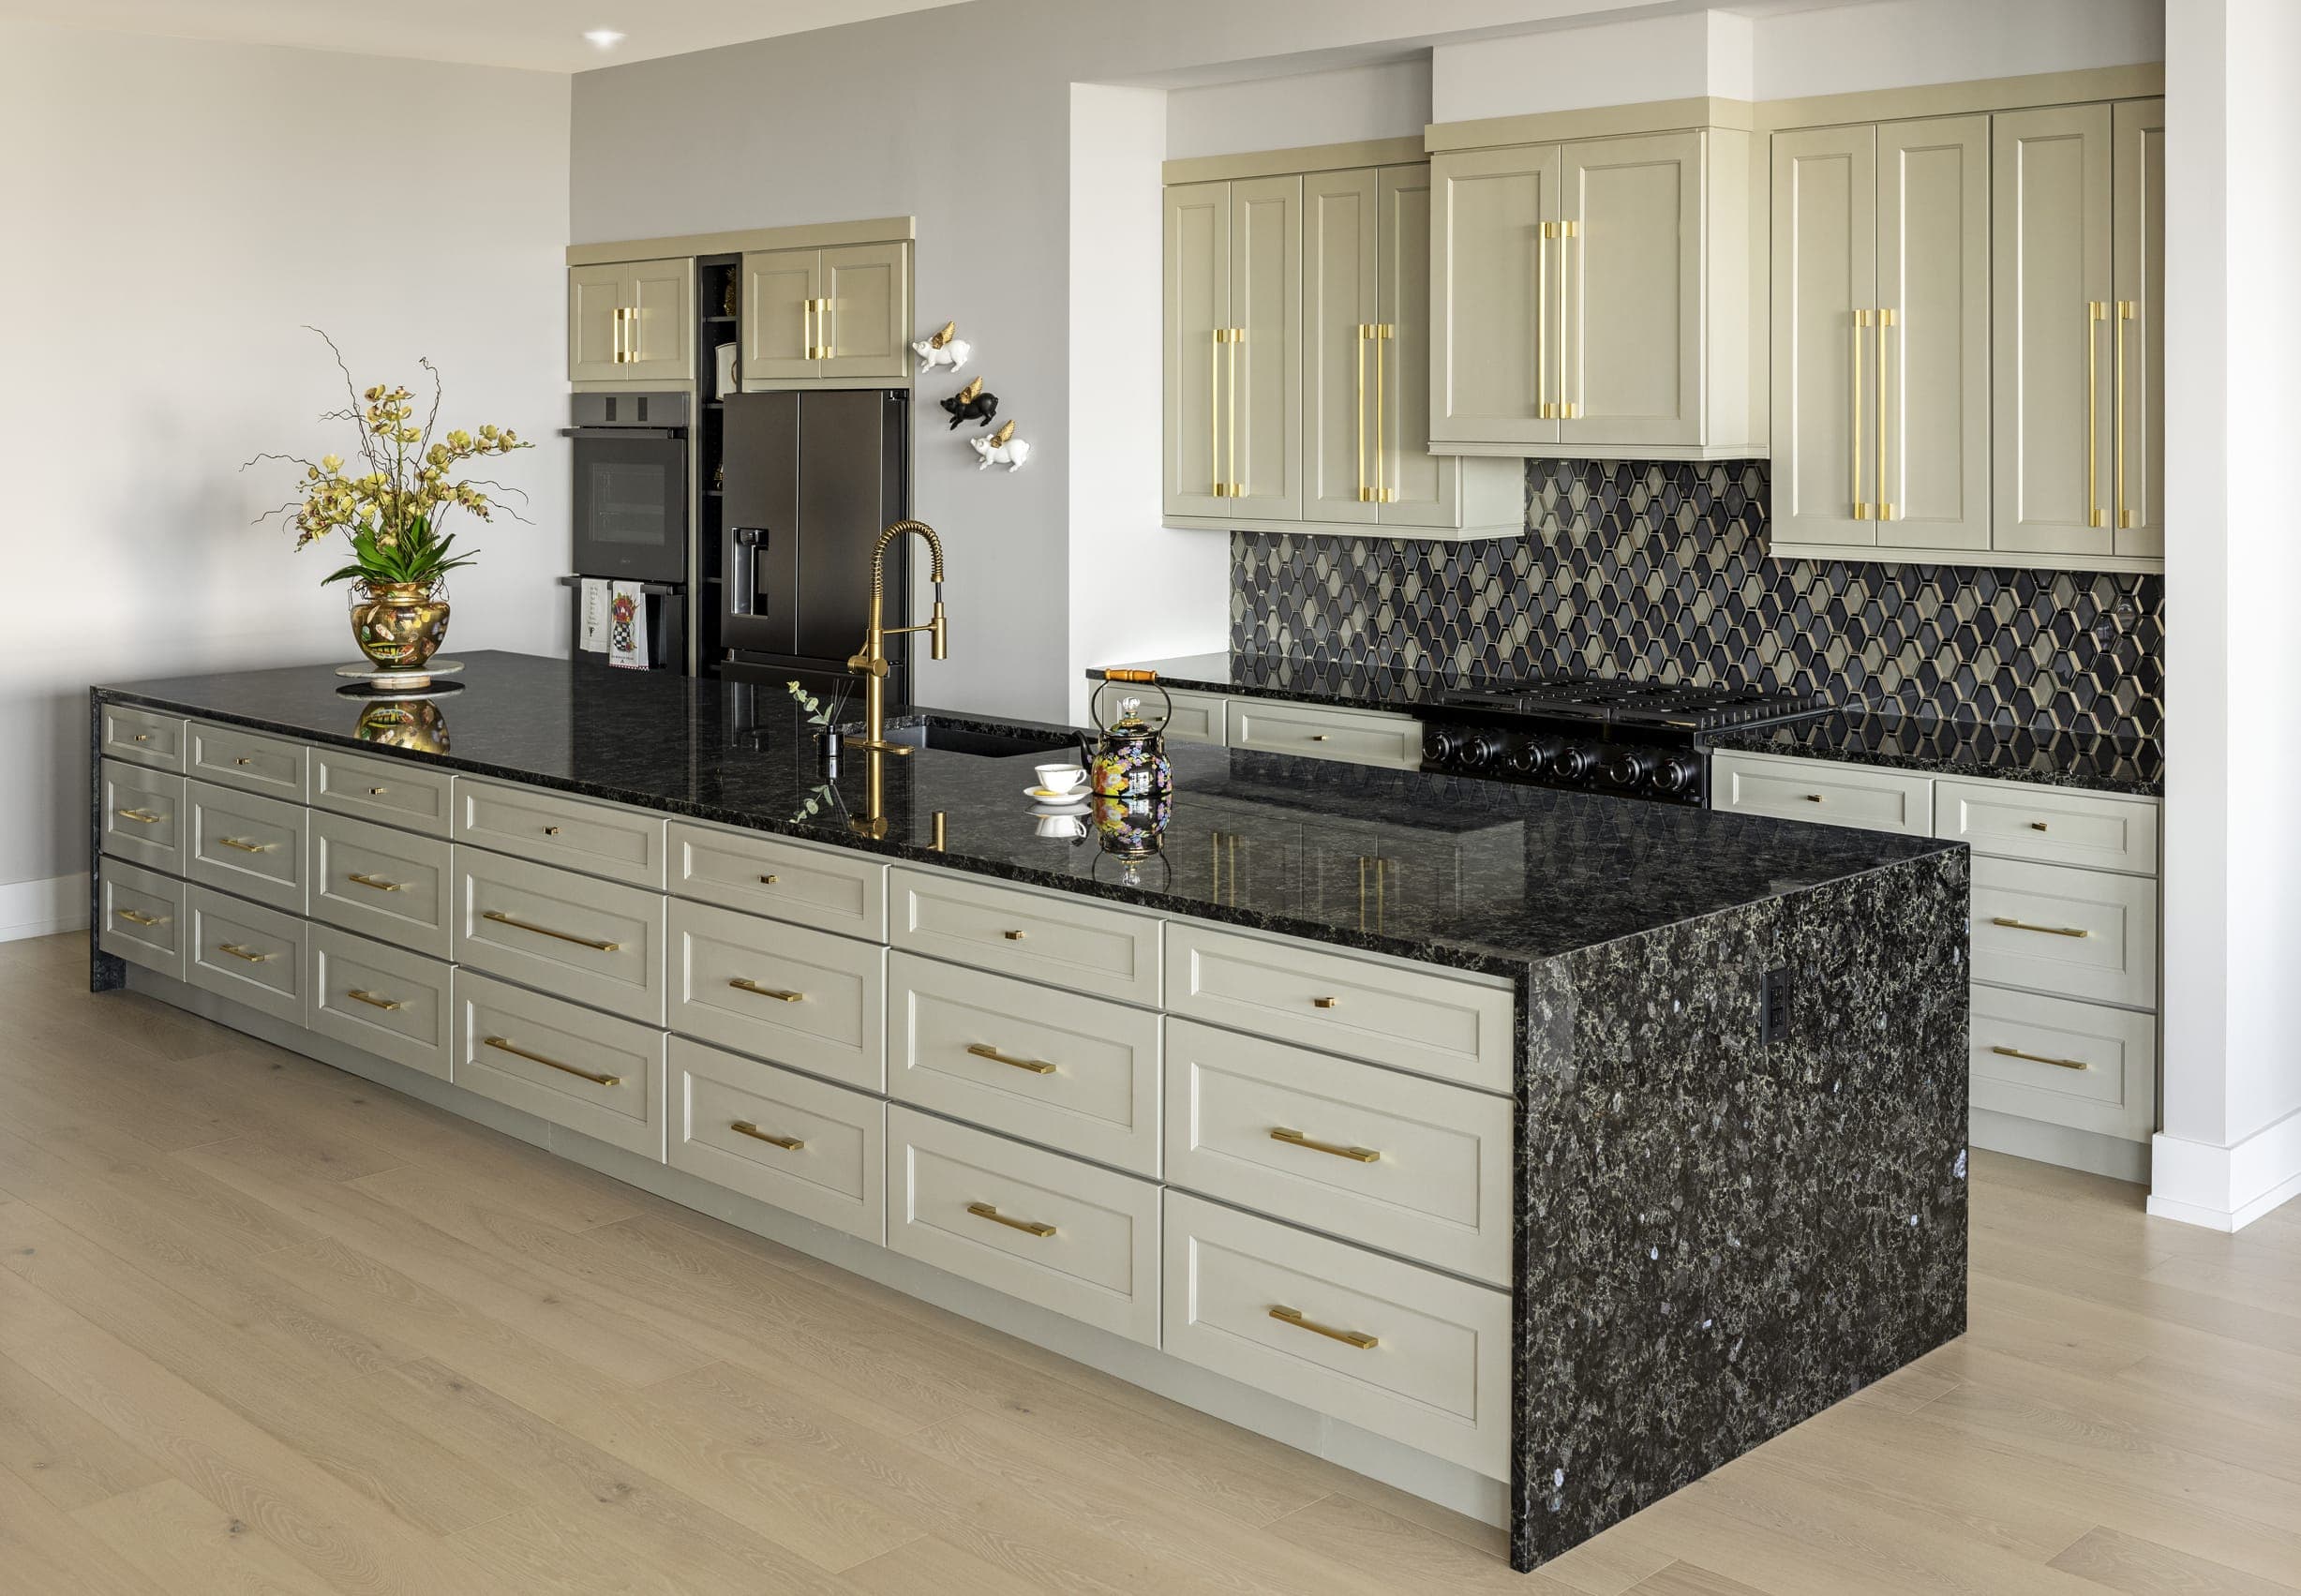 Black Stone Kitchen Island Dark Herringbone Tile Back Splash Gold Handled Olive Grey Cabinets Grey Painted Walls